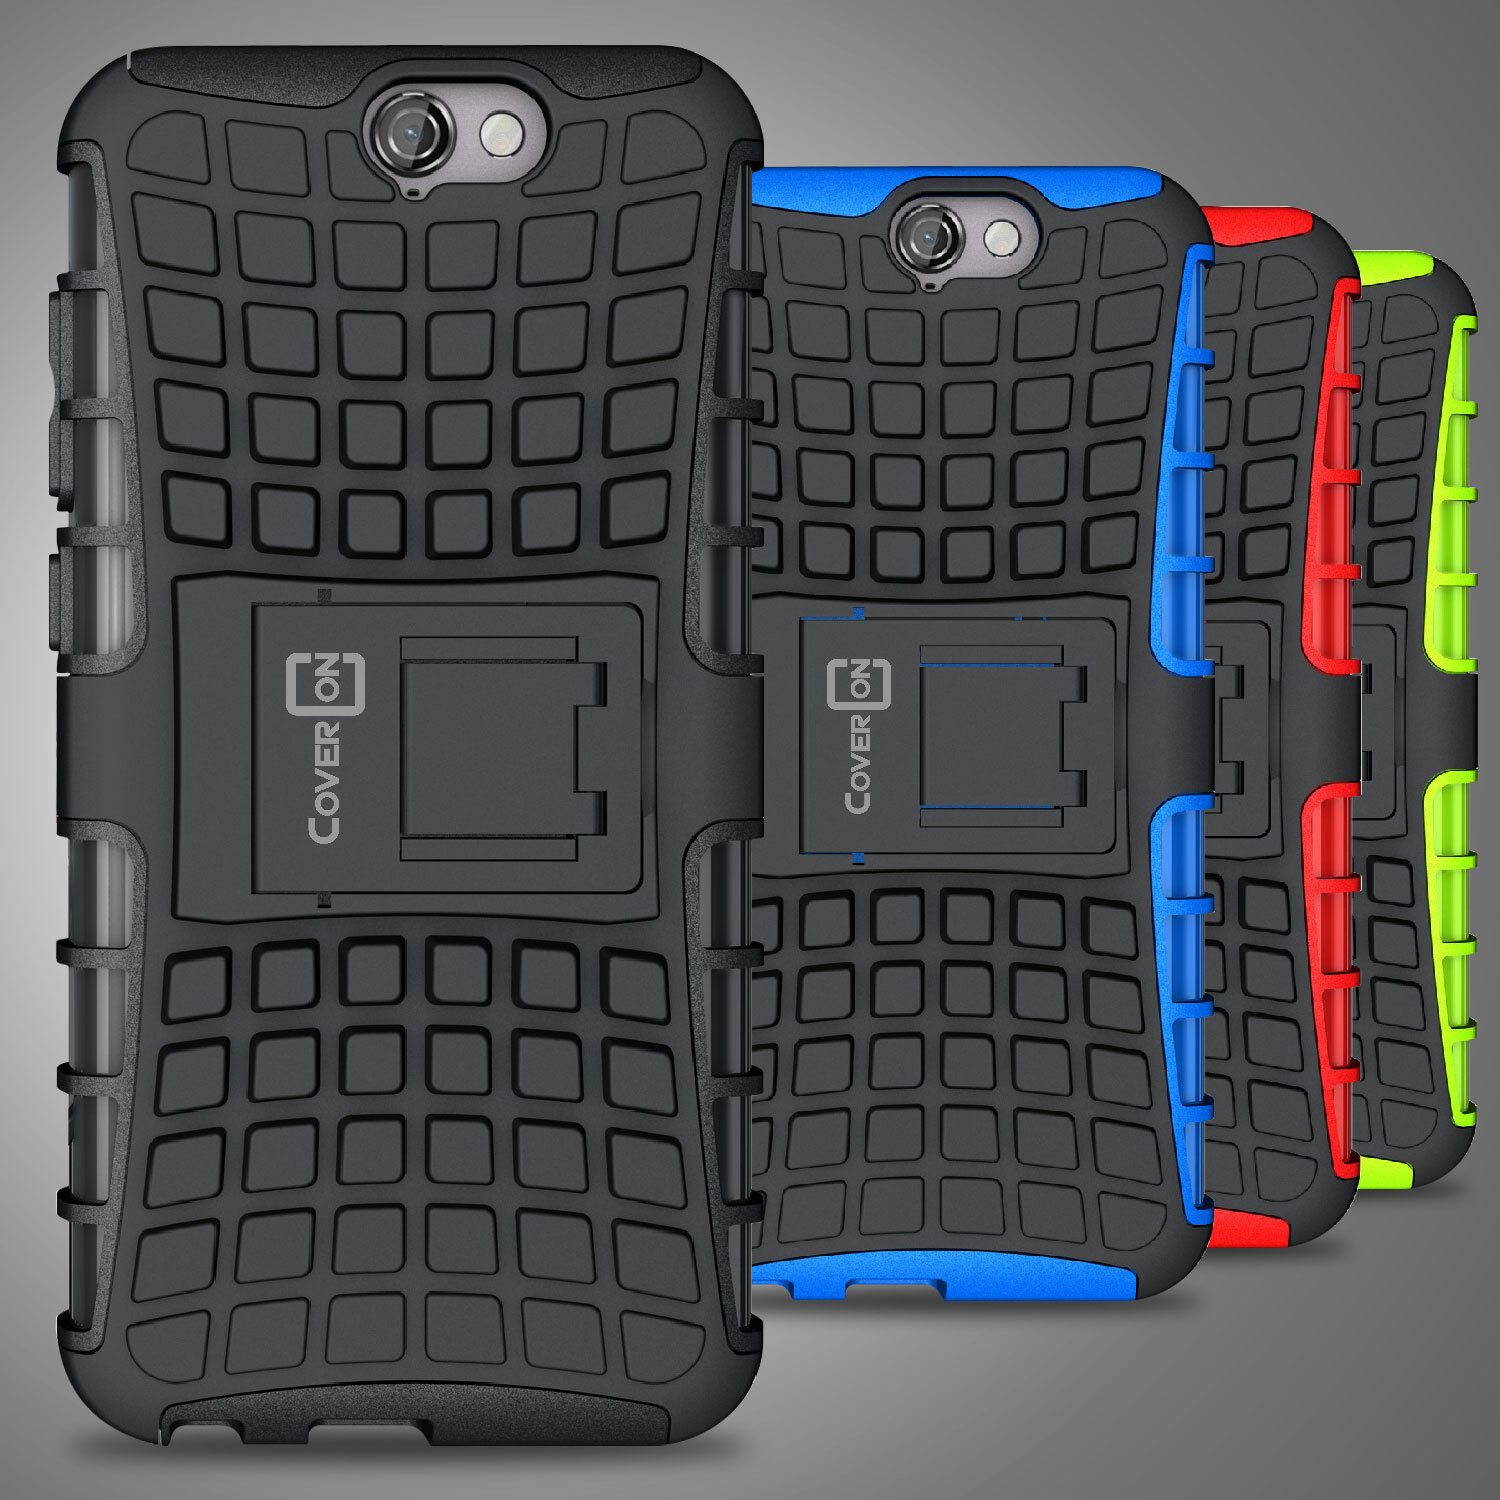 Denk vooruit Bekwaamheid De kerk For HTC One A9 Case Hard & Soft Protective Tough Kickstand Slim Phone Cover  | eBay